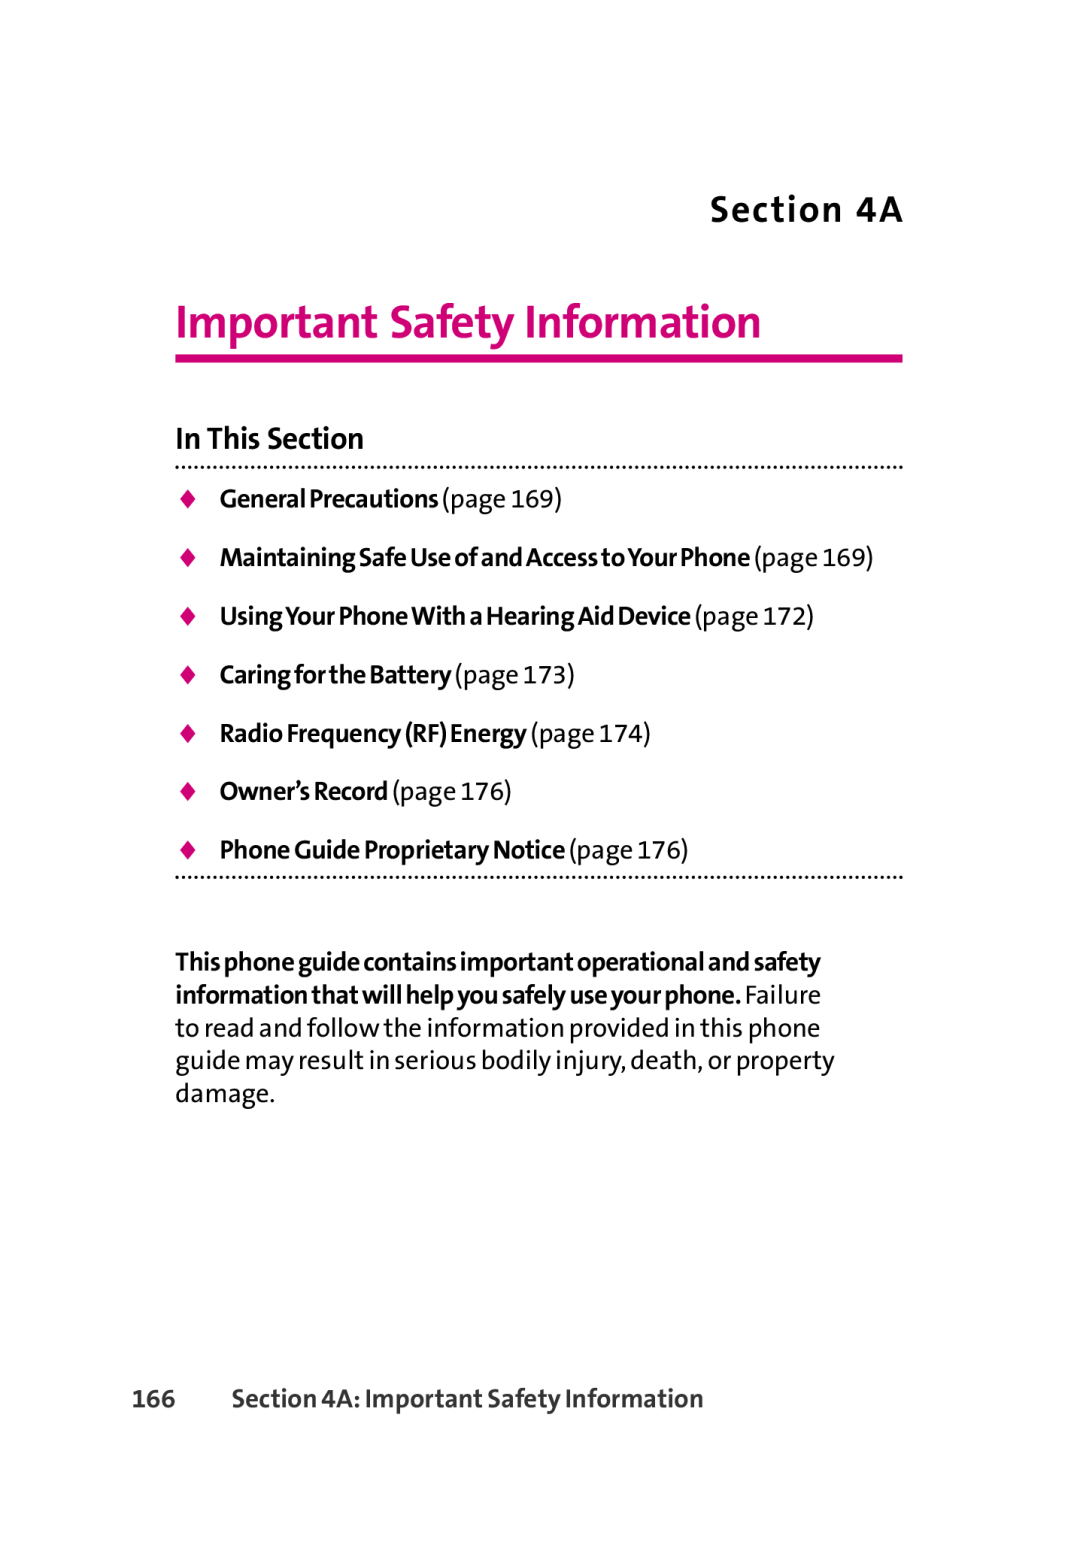 LG Electronics 350 Important Safety Information, GeneralPrecautionspage MaintainingSafeUseofandAccesstoYourPhonepage 